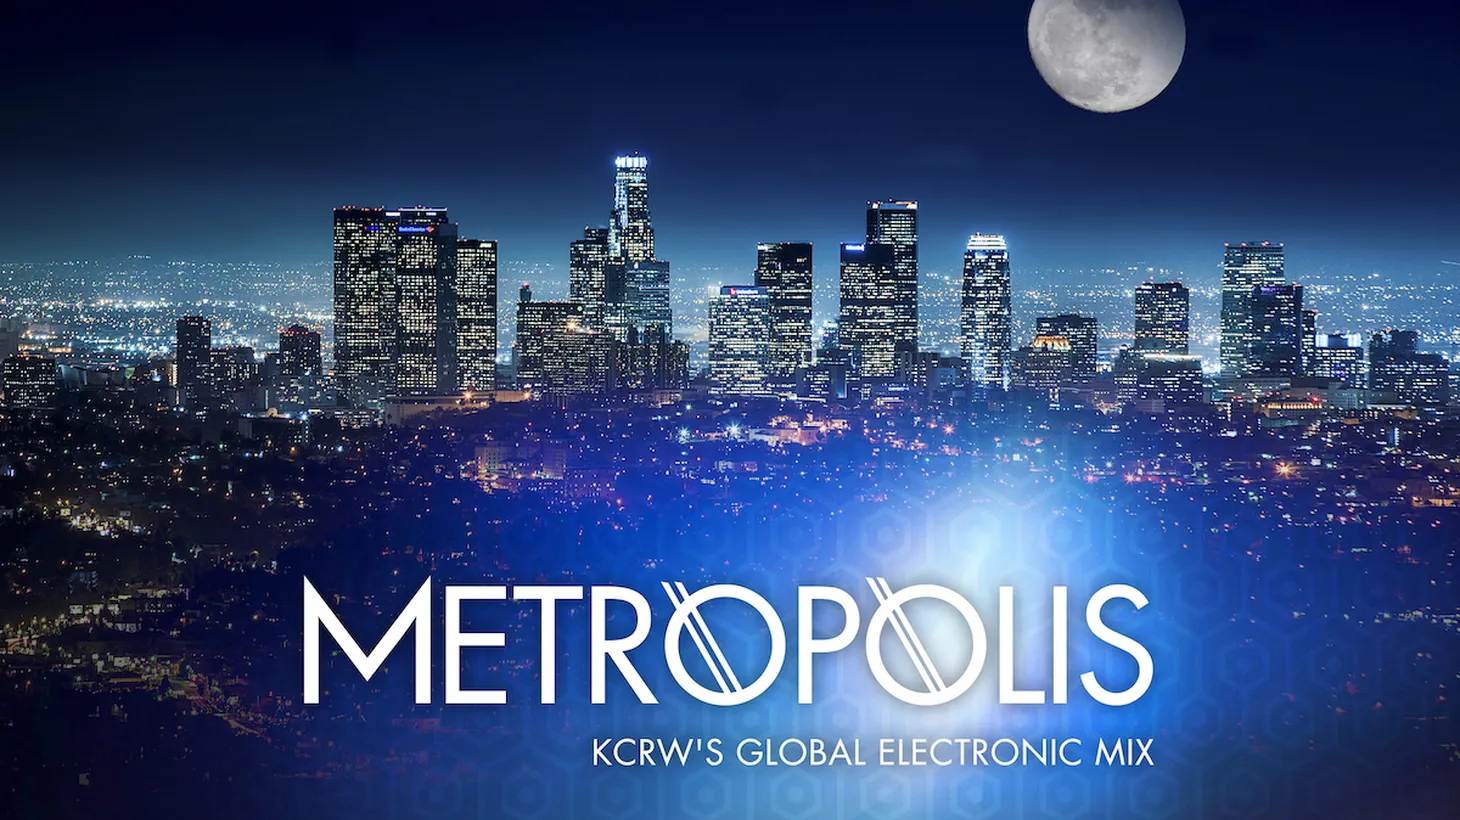 Metropolis playlist, August 7, 2021.